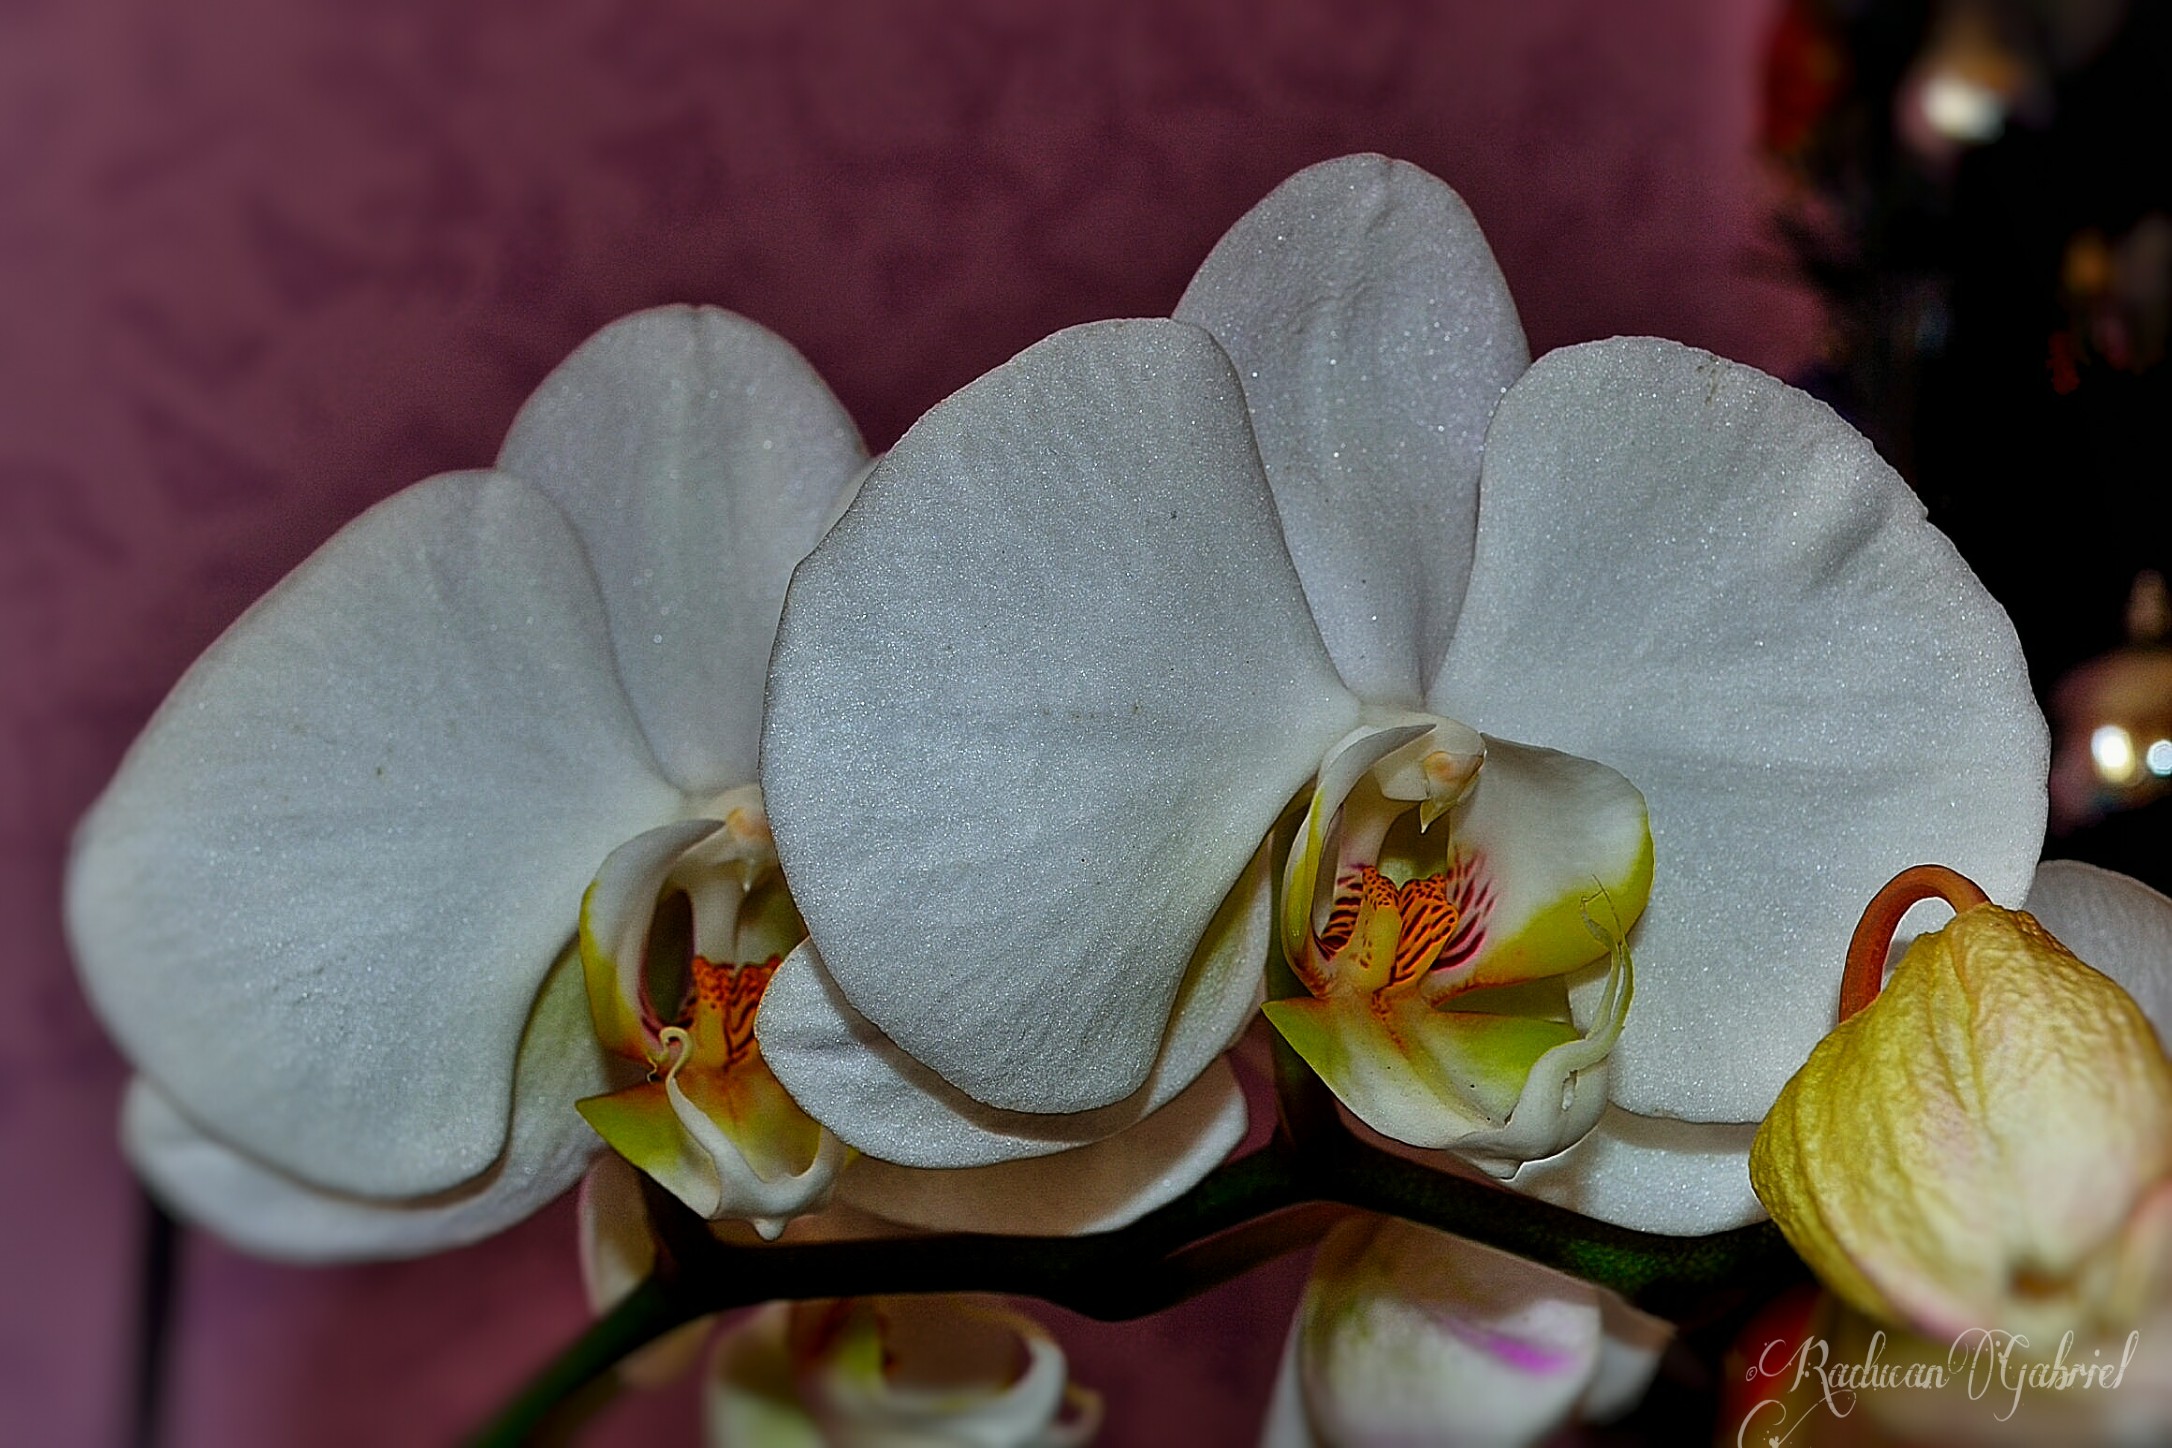 Orchids ......